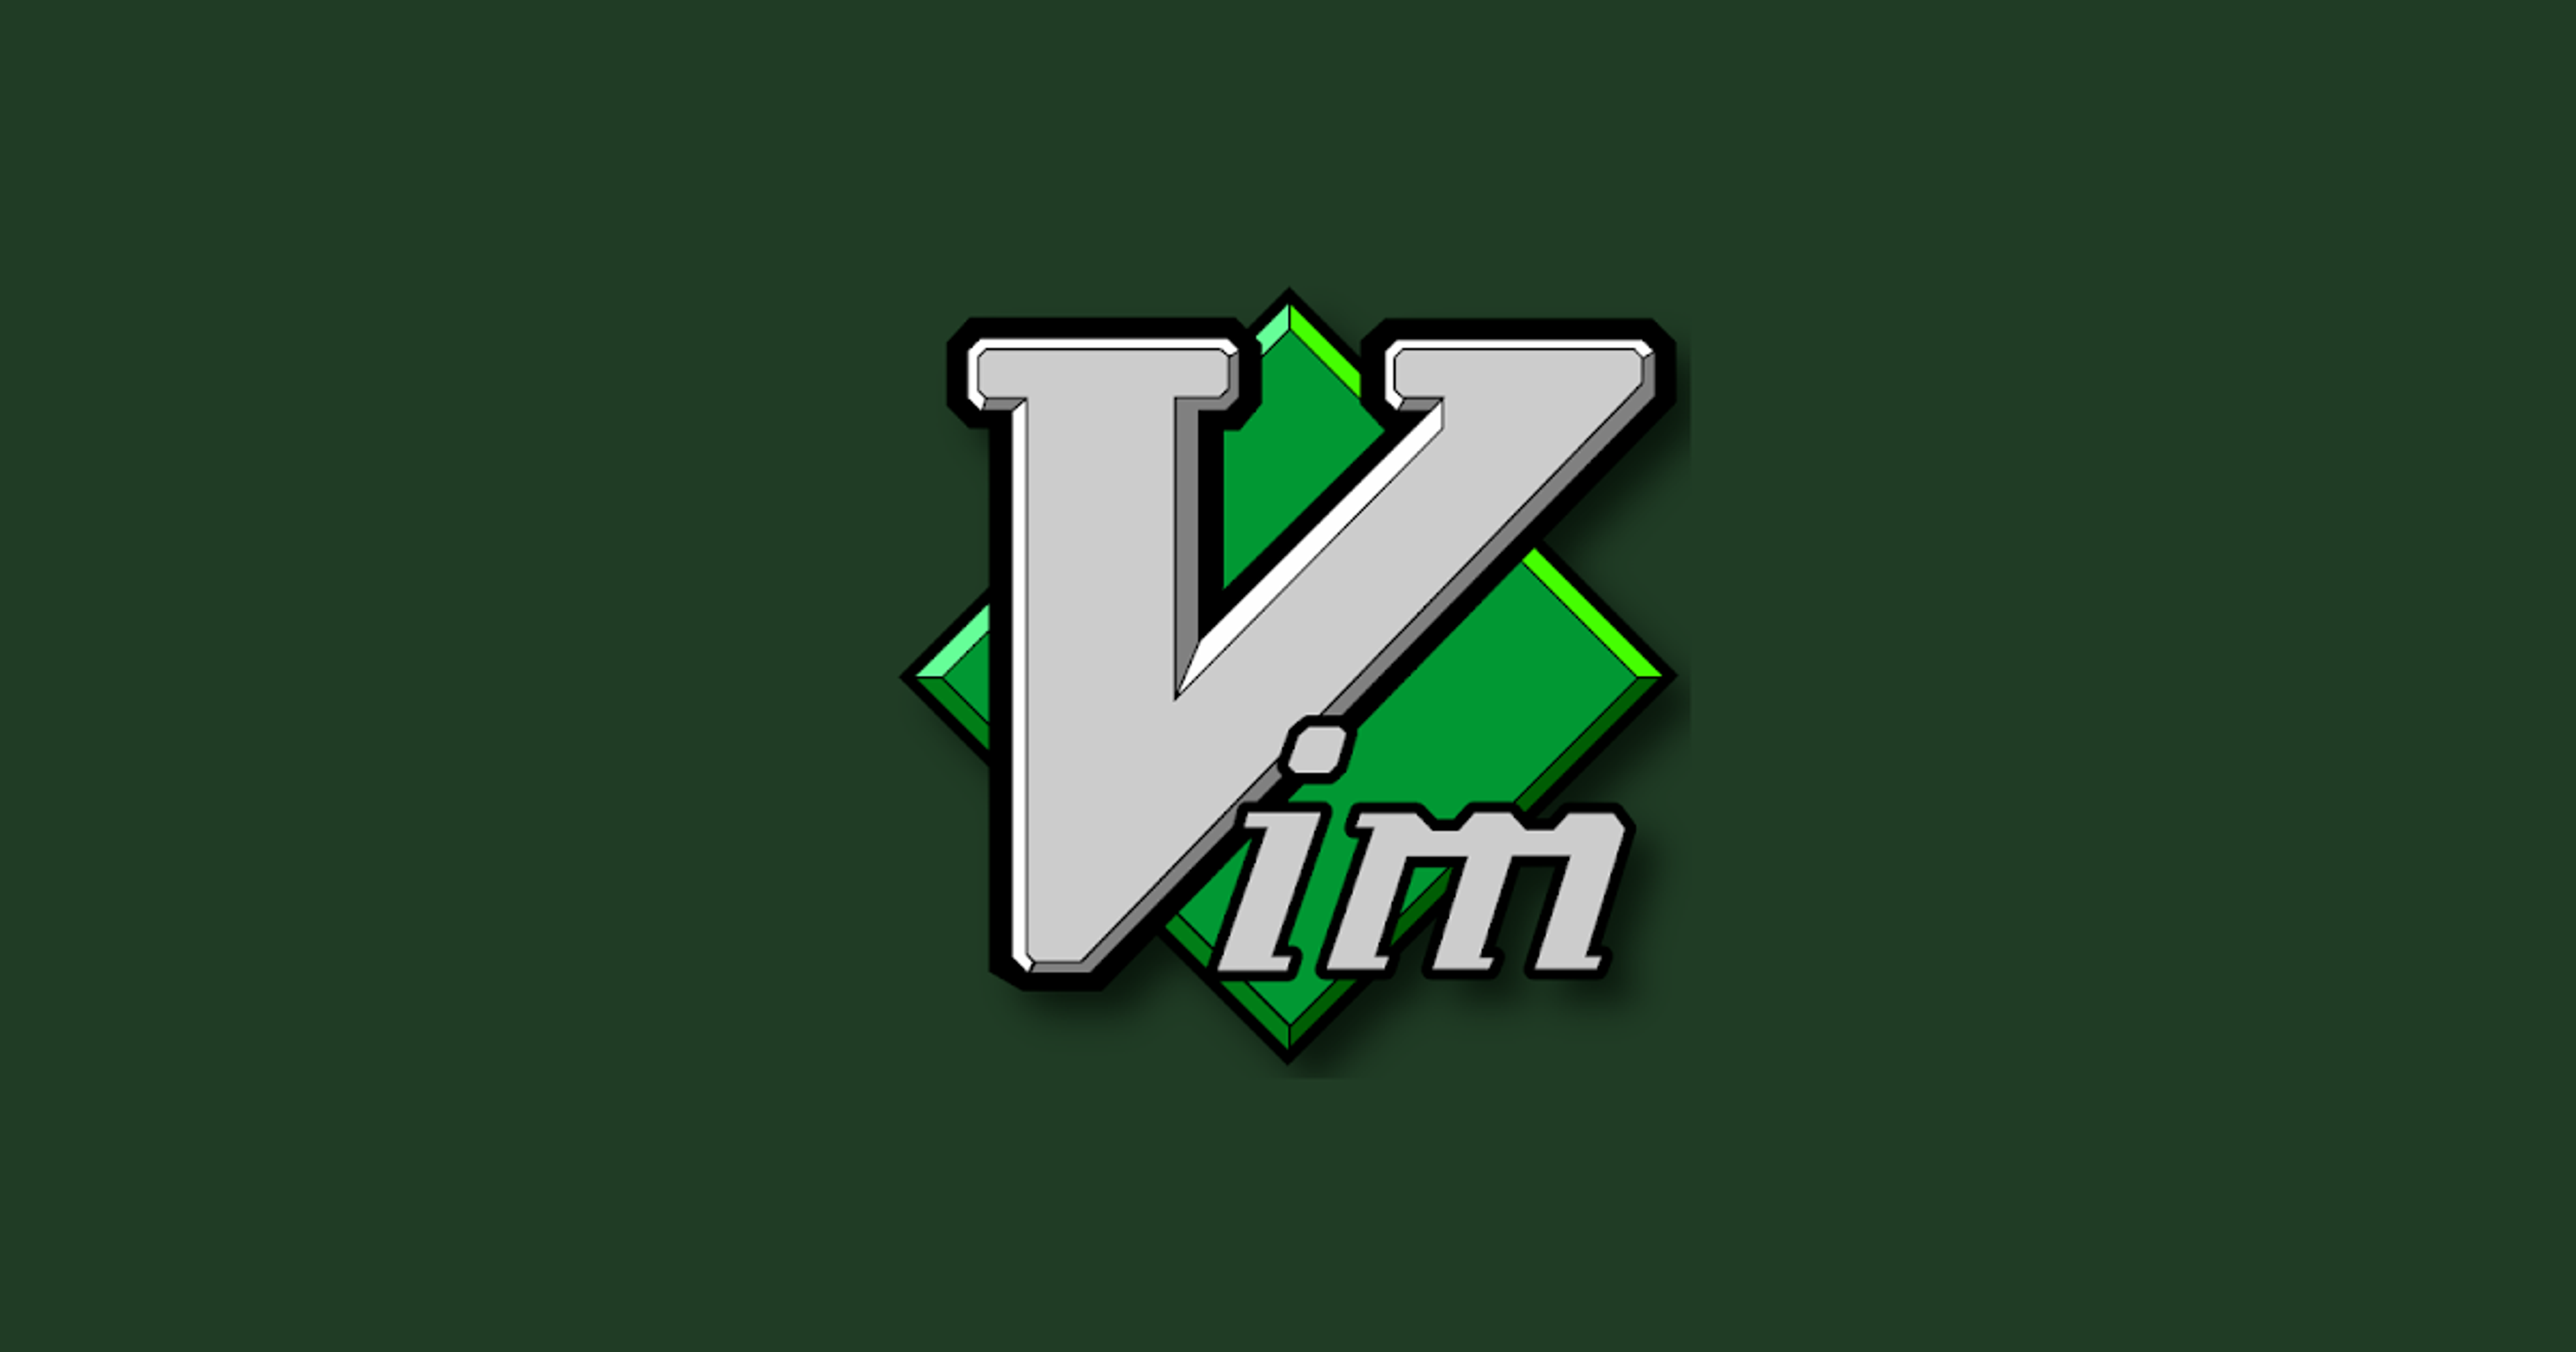 Using Vim as a beginner